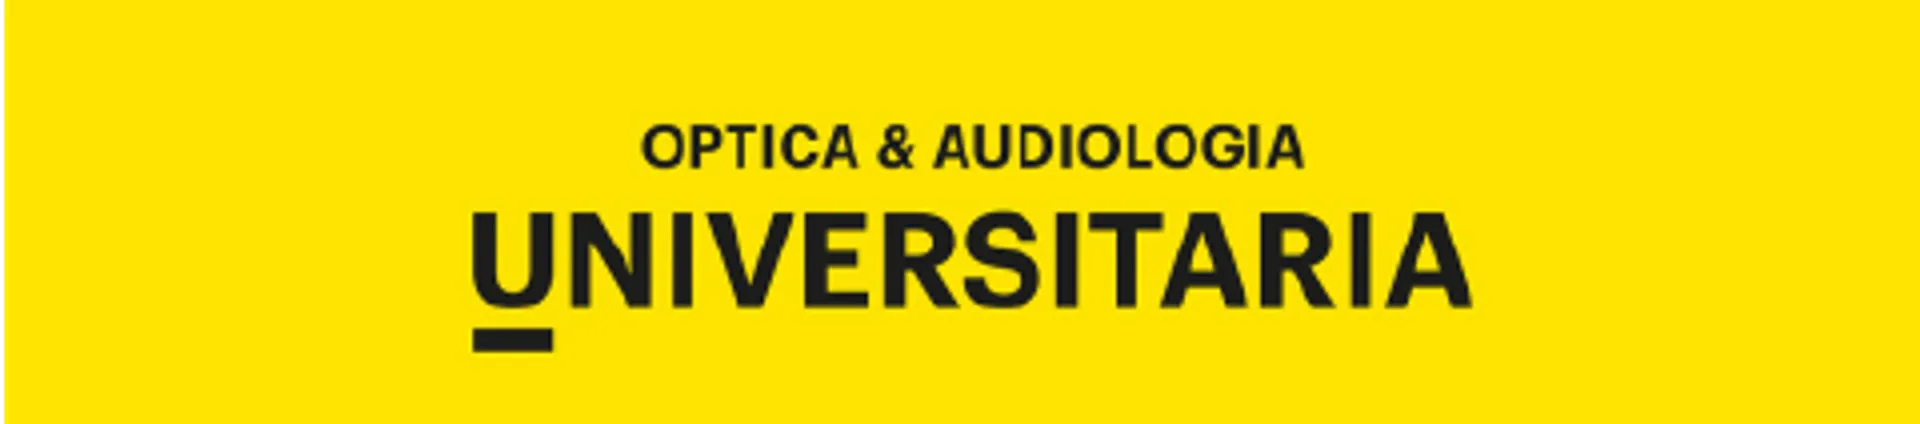 OPTICA UNIVERSITARIA logo de catálogo